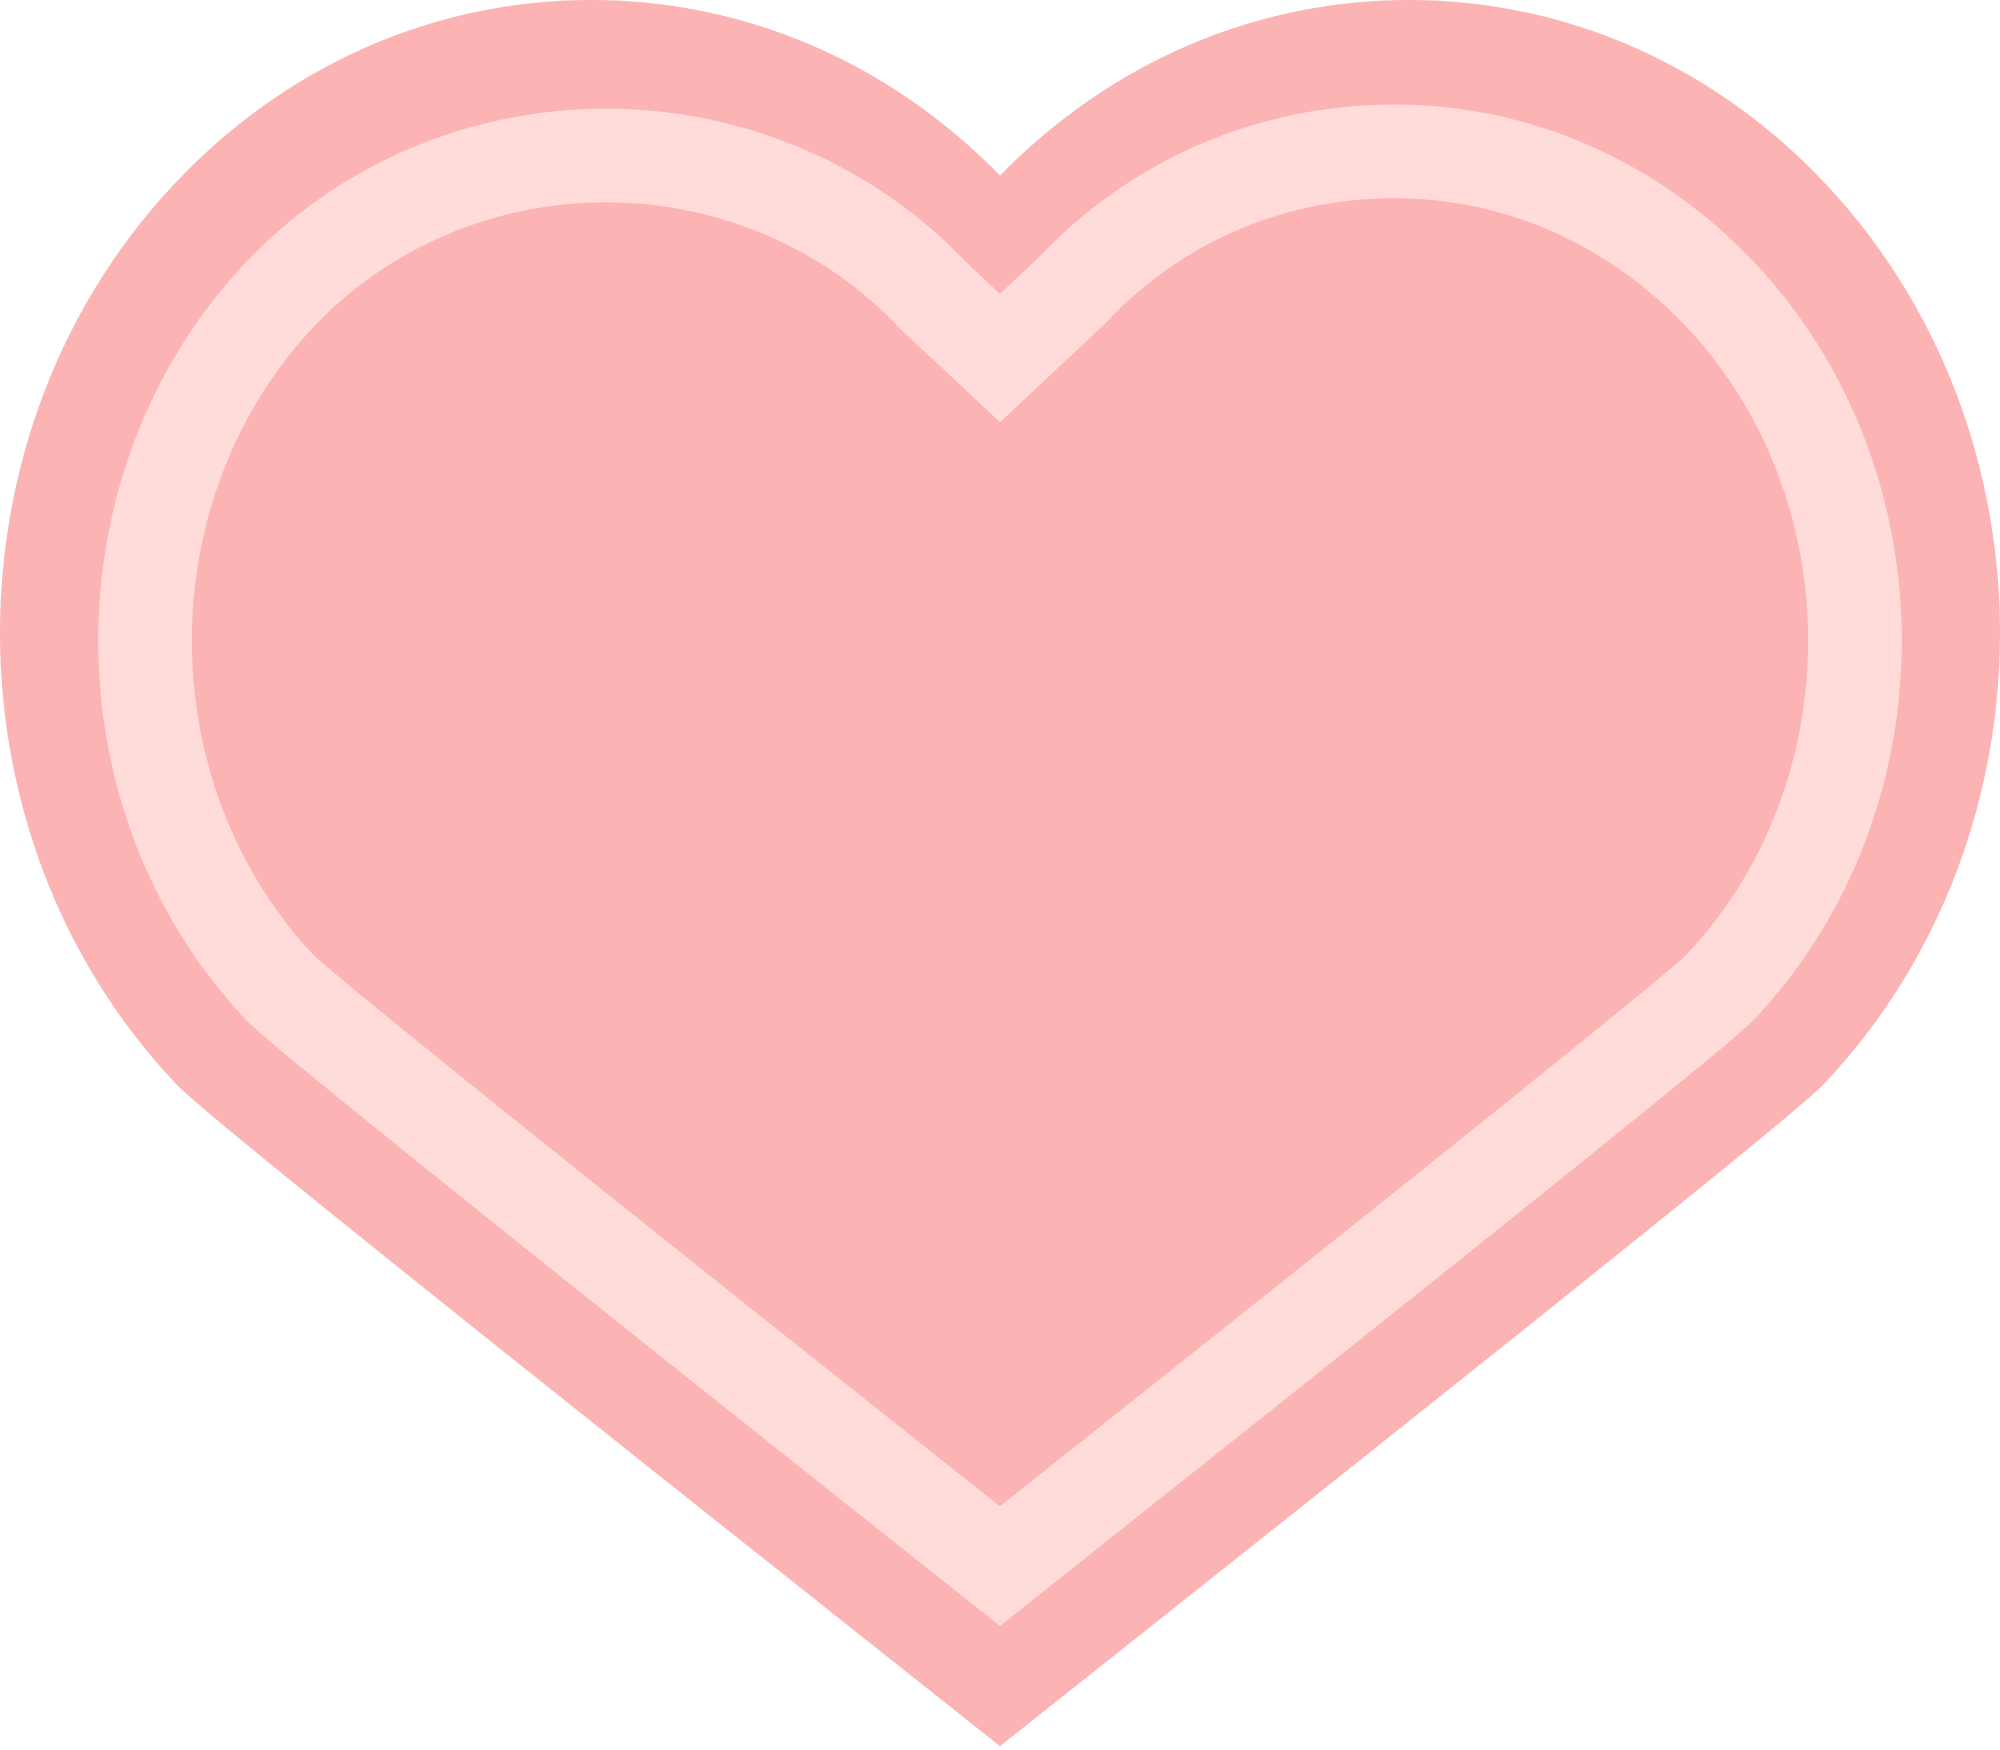 File:Heart icon - Wikimedia Commons